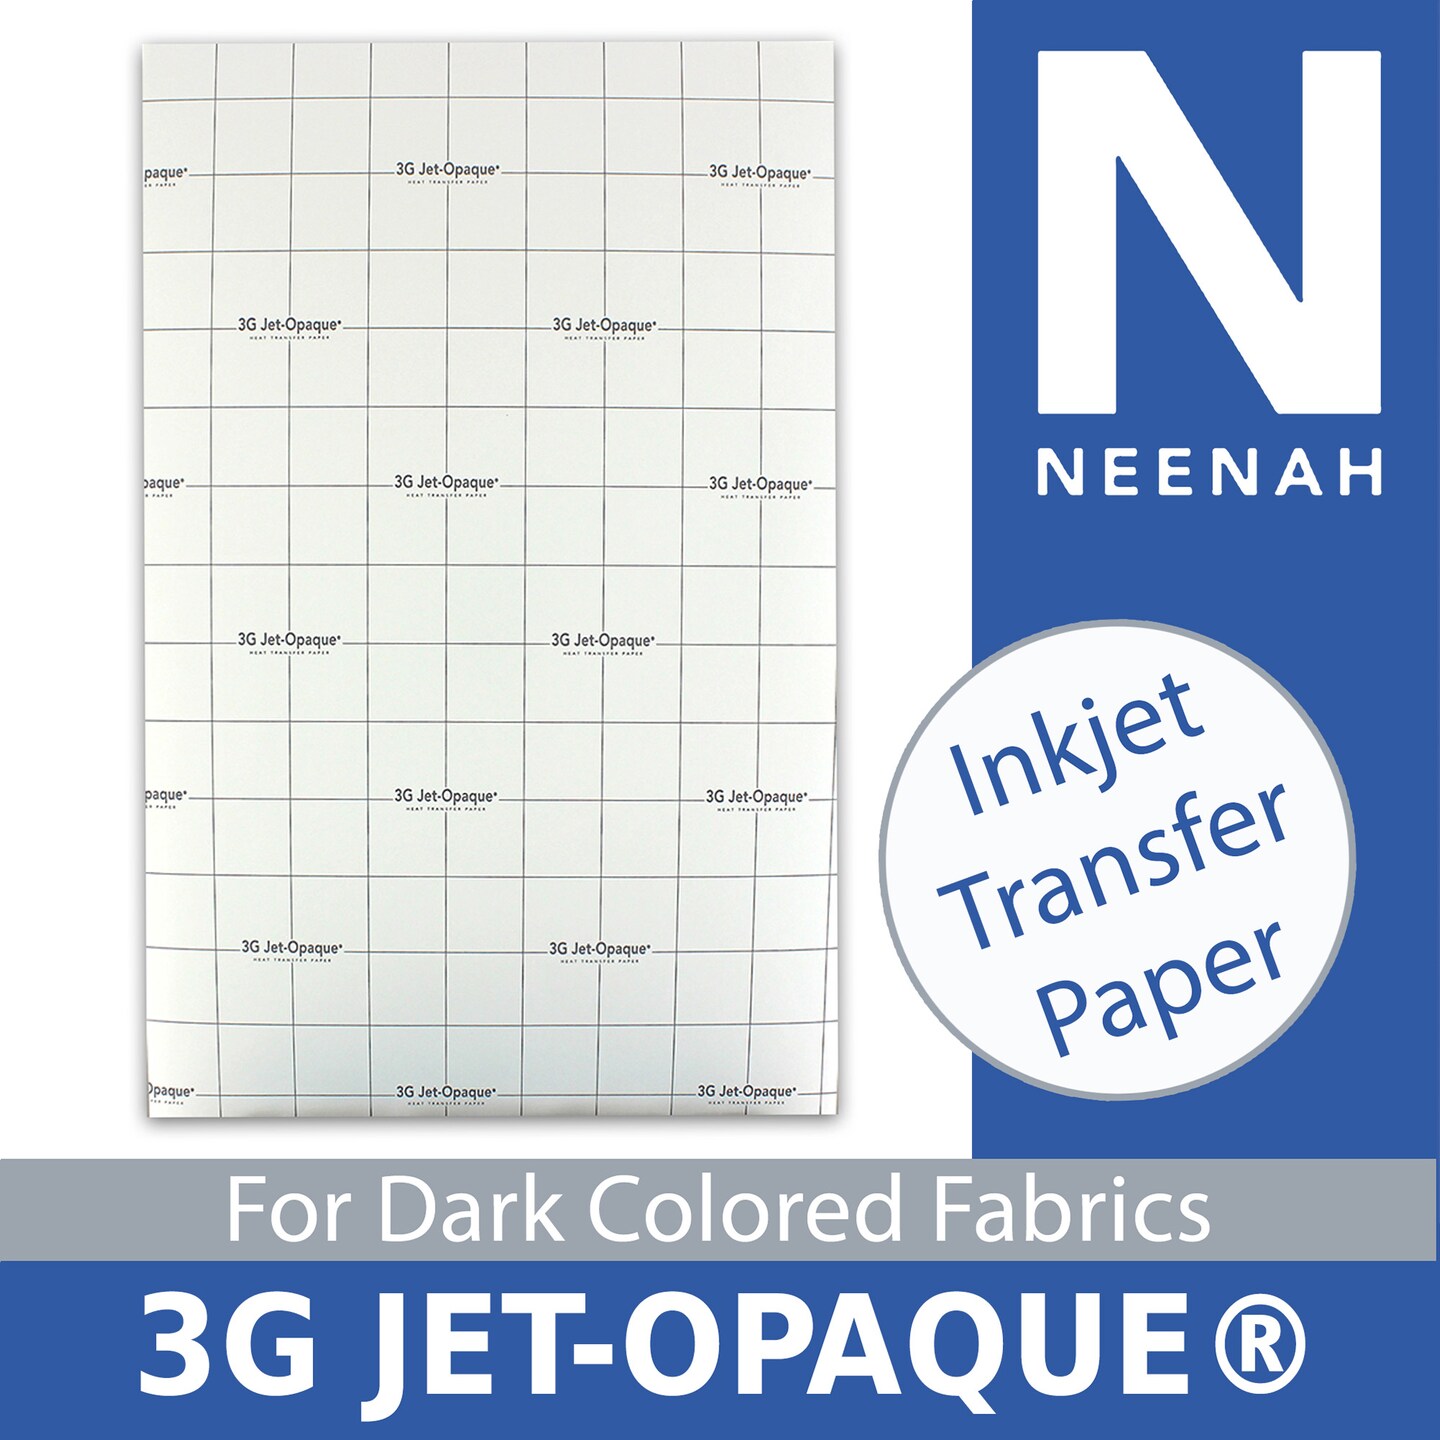 coldenhove-3g-jet-opaque-heat-transfer-paper-michaels